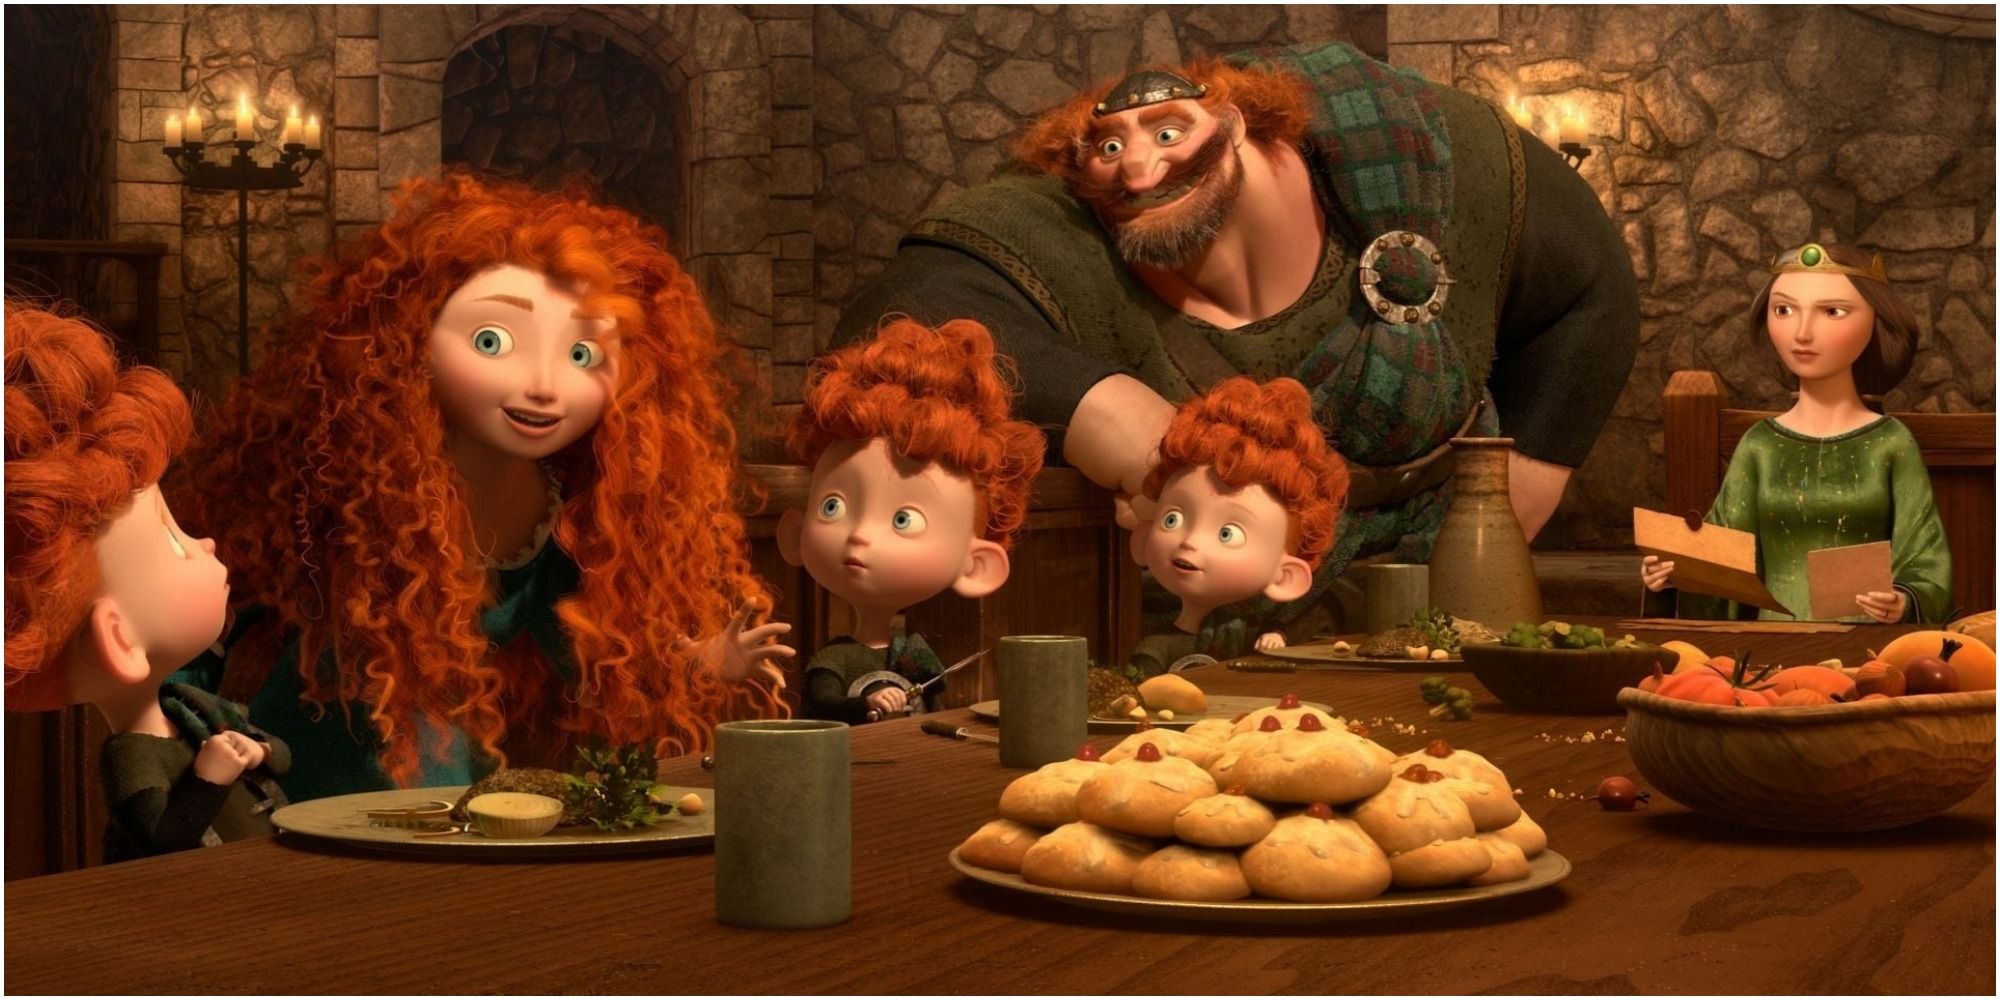 Merida and her family in Brave. 